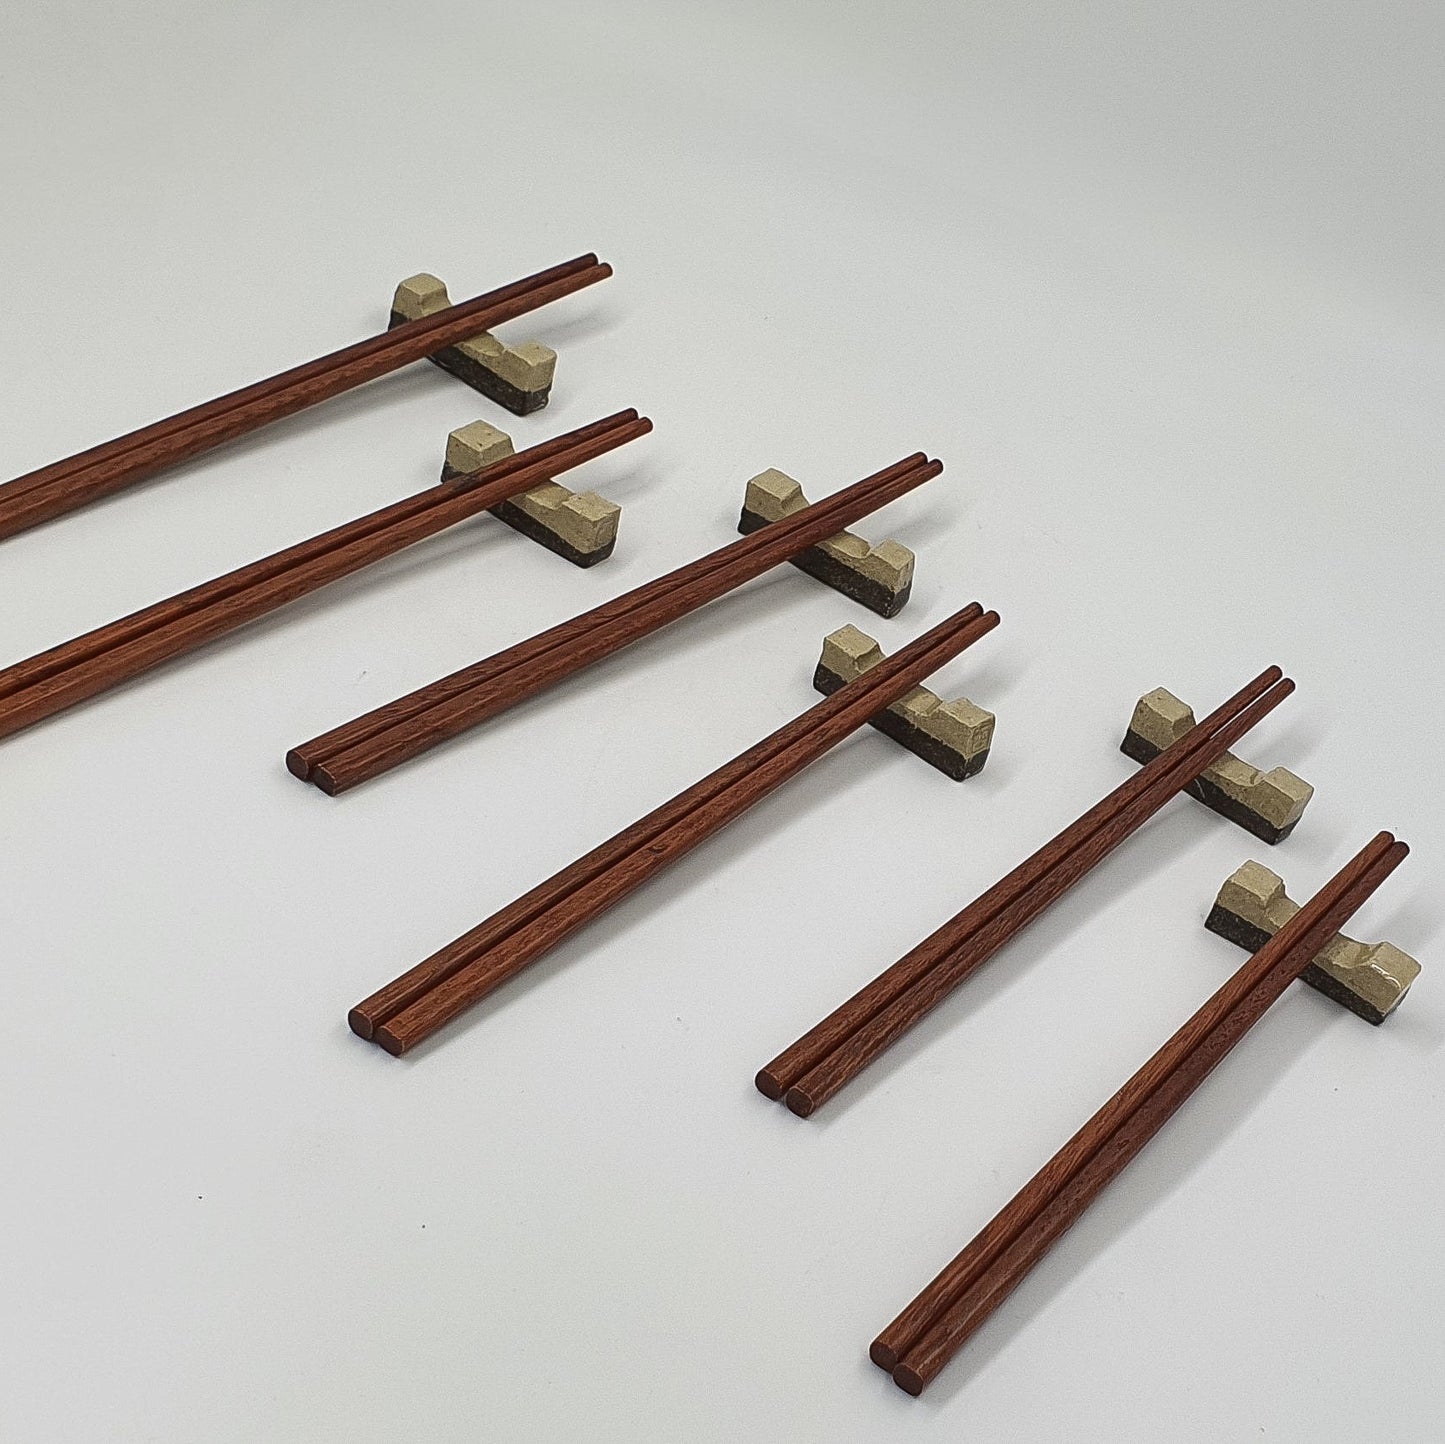 Chocolatte Chopsticks Rests (set of 6) with complimentary chopsticks